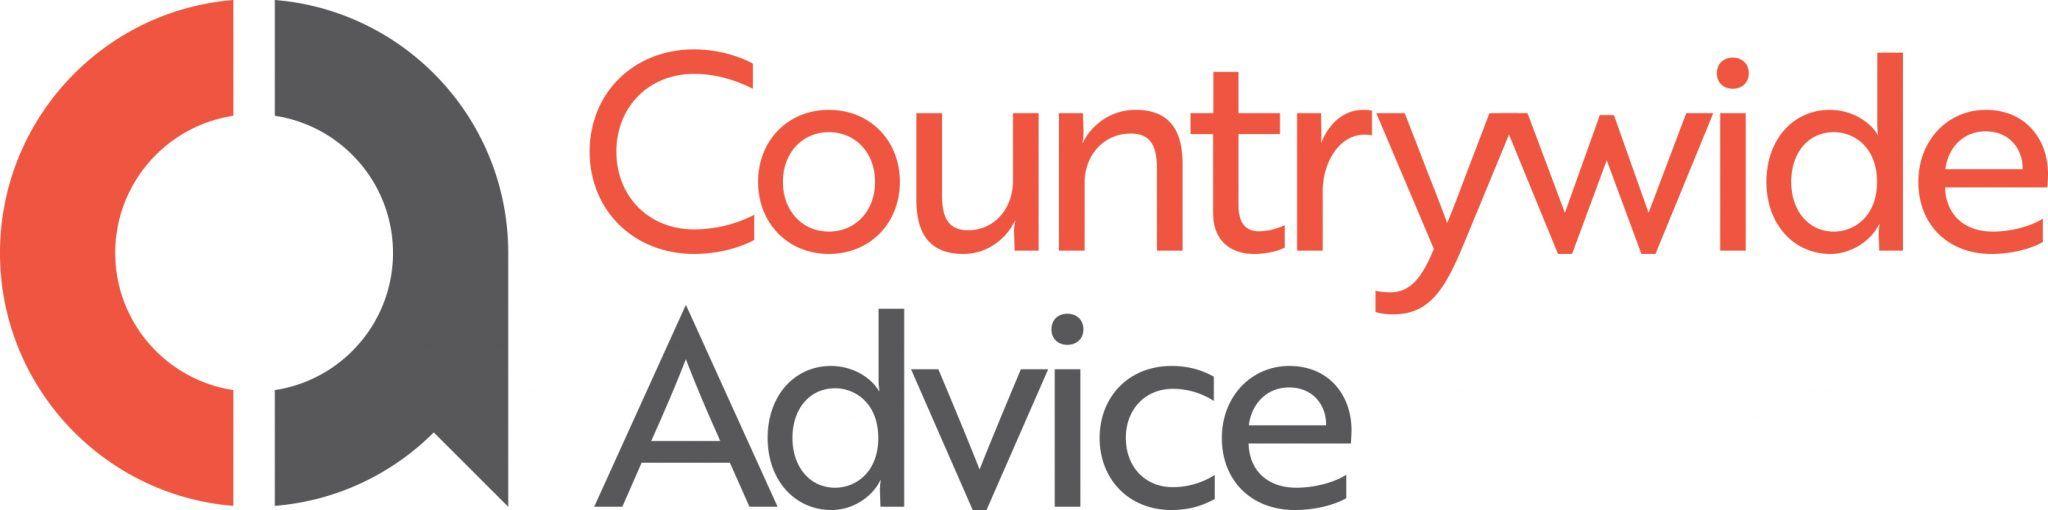 Countrywide Logo - countrywide logo hori Association of South Australia